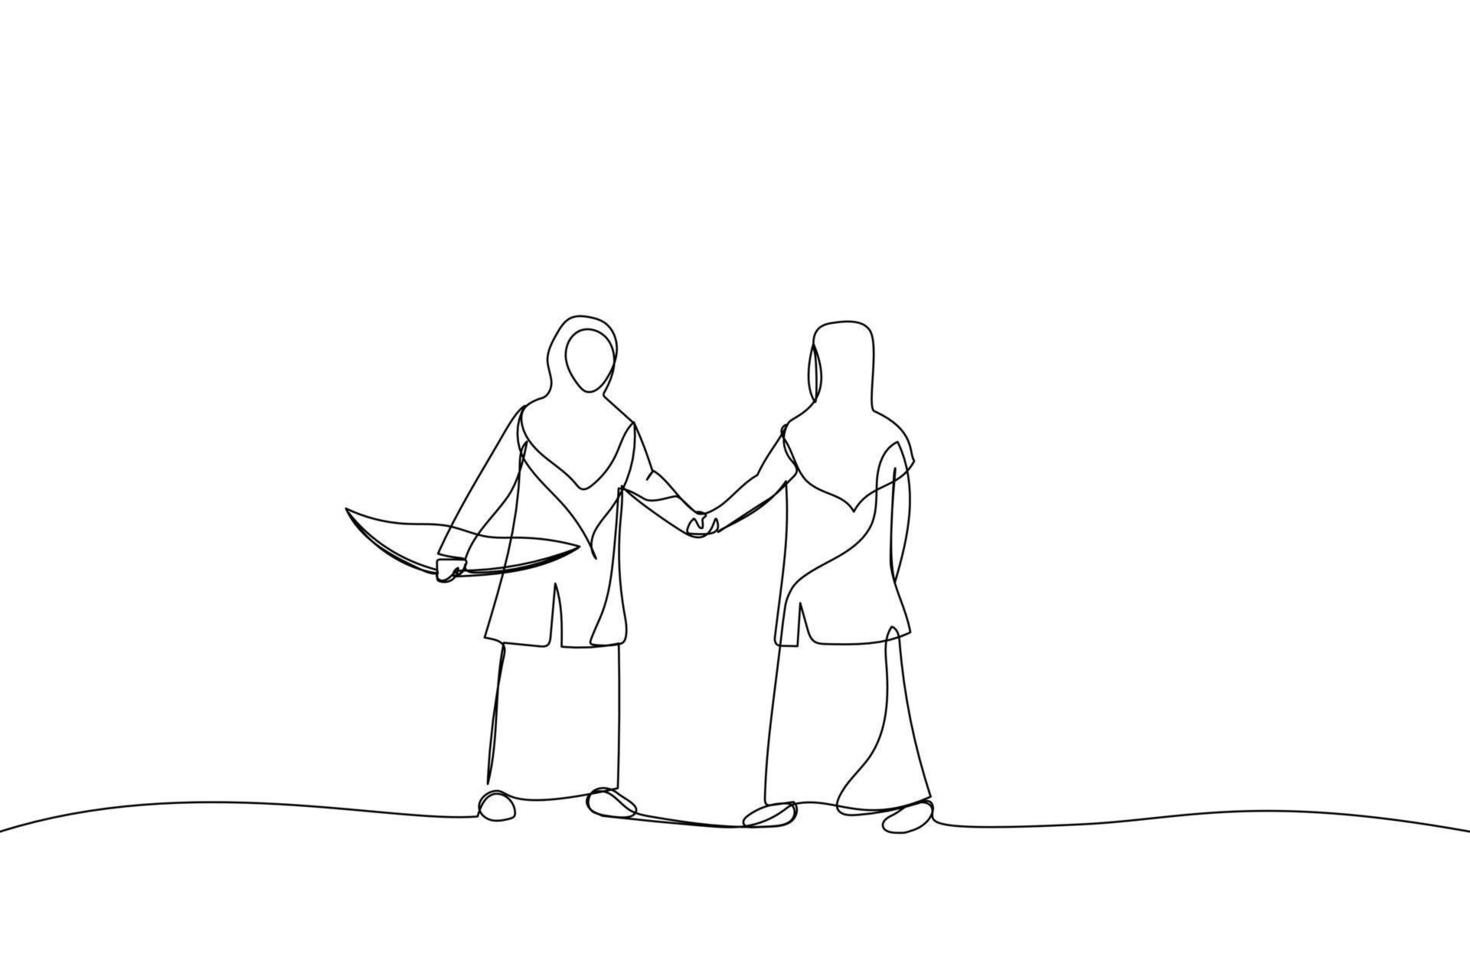 Illustration of businessmen shaking hands agreement after finished danger risky apple shot archery show. Metaphor for trusted partner, business relation, collaboration. One line art style vector